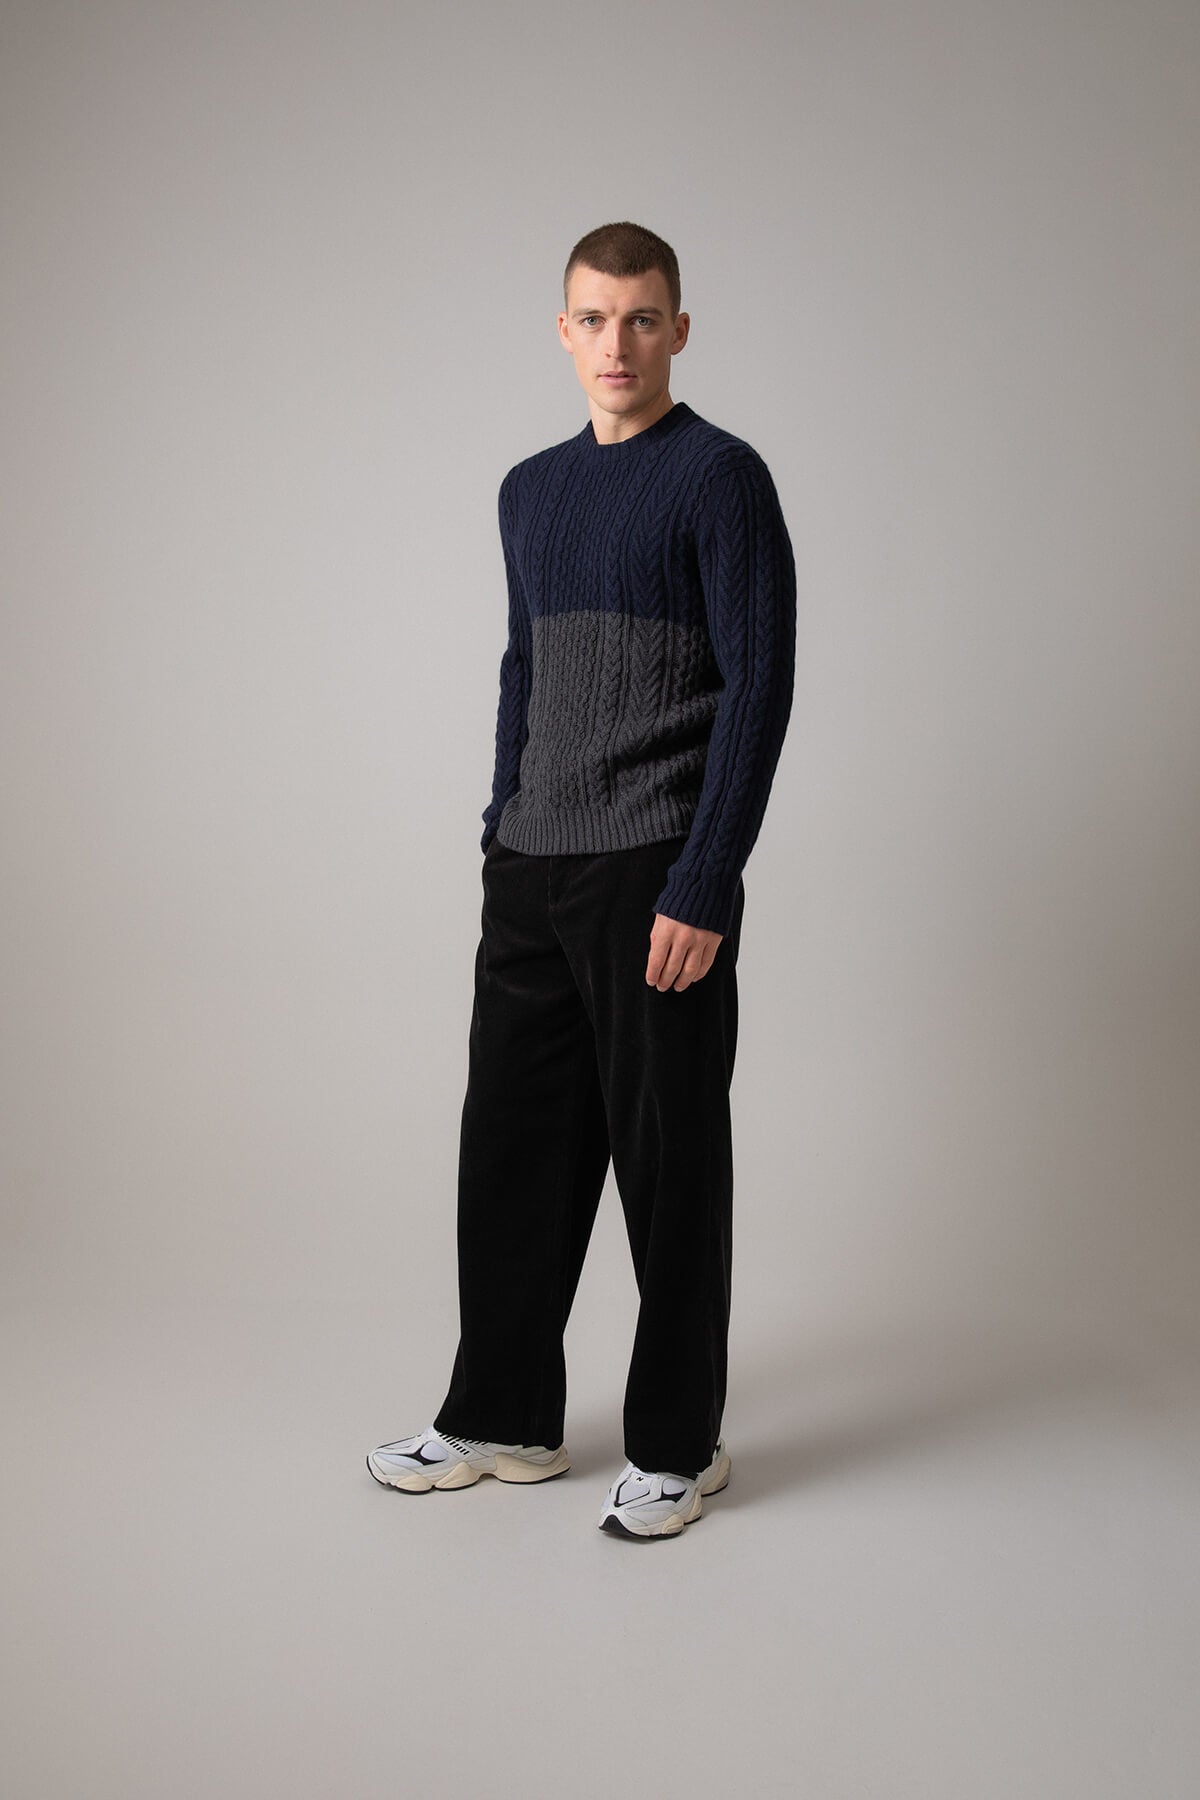 Model wearing Johnstons of Elgin Charcoal Men’s Aran Colour Block Cashmere Jumper KAI05197Q23917